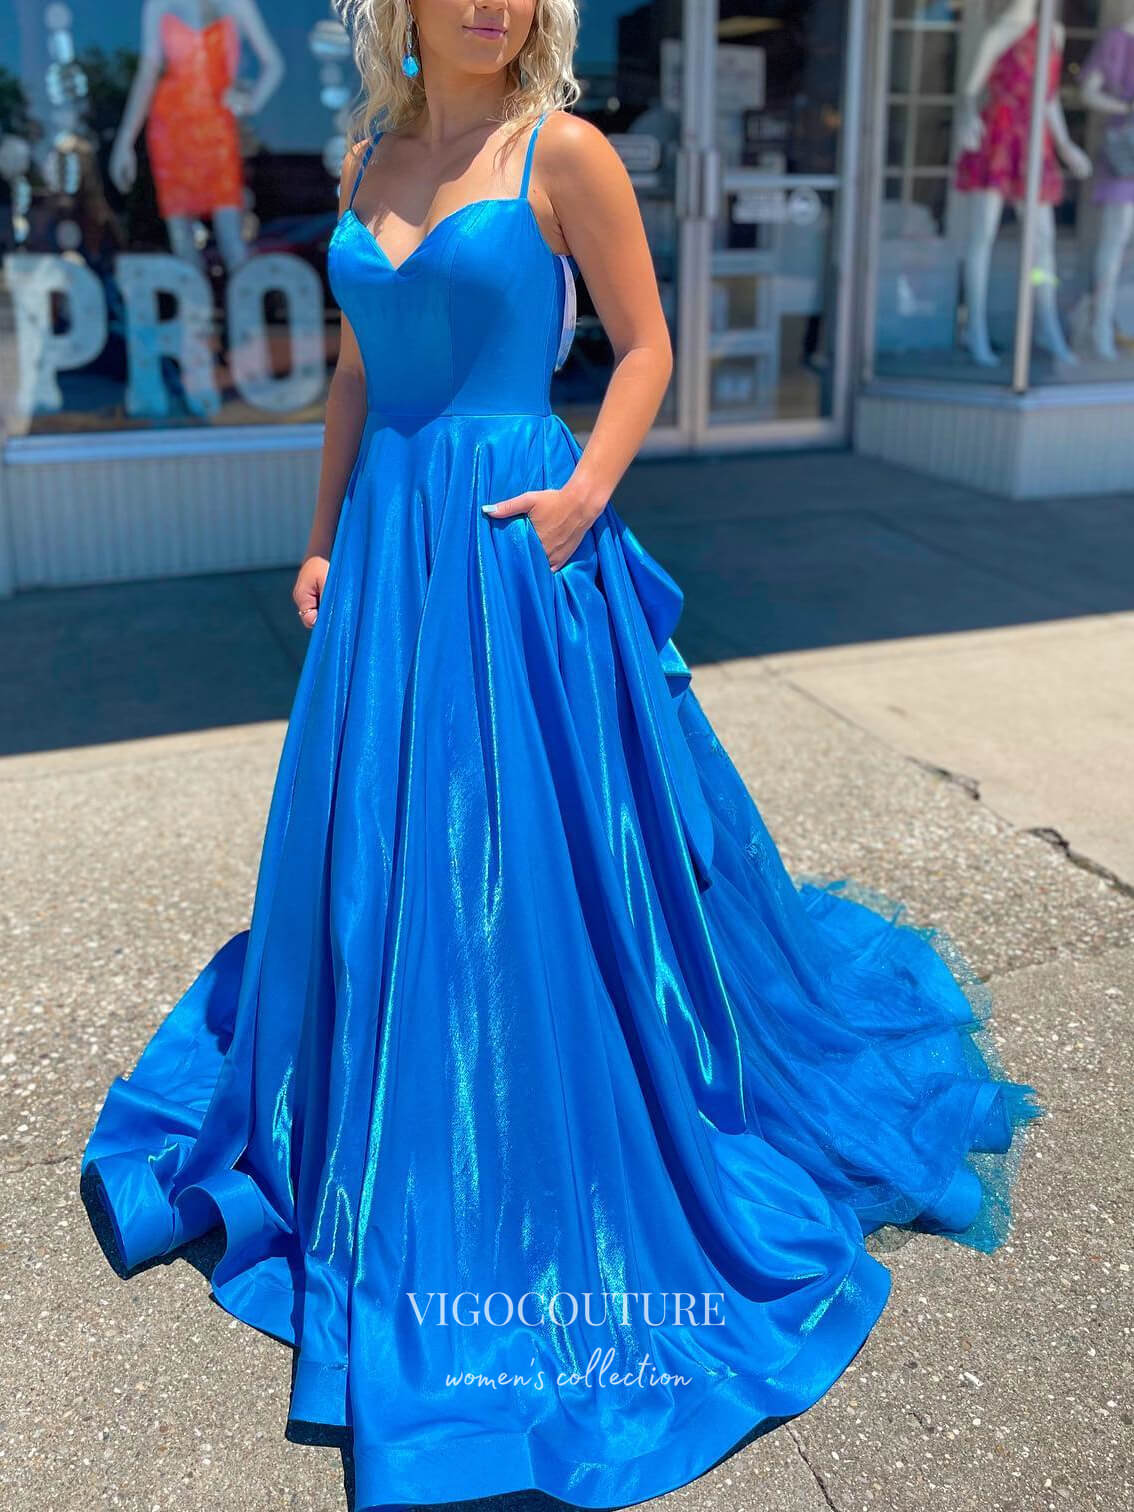 vigocouture-Blue Sparkly Satin Prom Dresses With Pockets Spaghetti Strap Evening Dress 21575-Prom Dresses-vigocouture-Blue-US2-